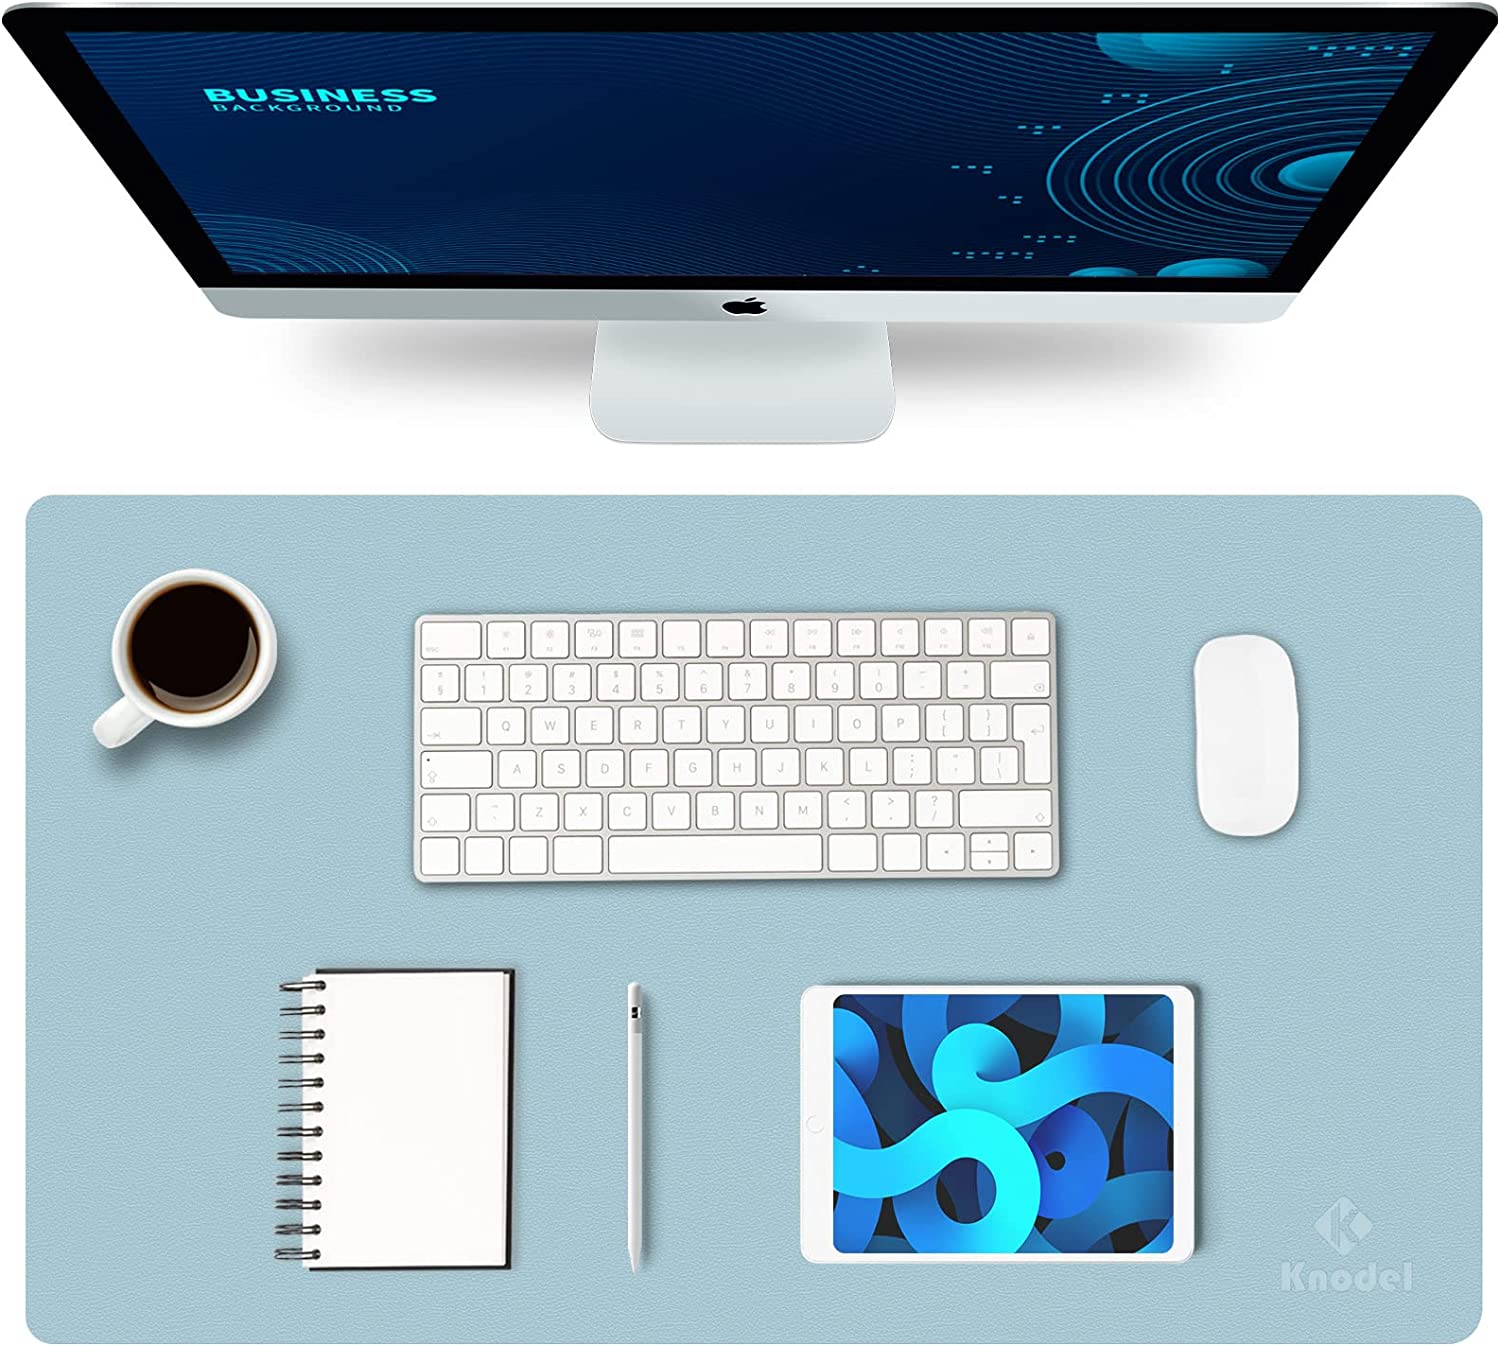 K KNODEL Desk Mat, Mouse Pad, Desk Pad, Waterproof Desk Mat for Desktop, Leather  Desk Pad for Keyboard and Mouse, Desk Pad Protector for Office and Home  (Light Blue, 23.6